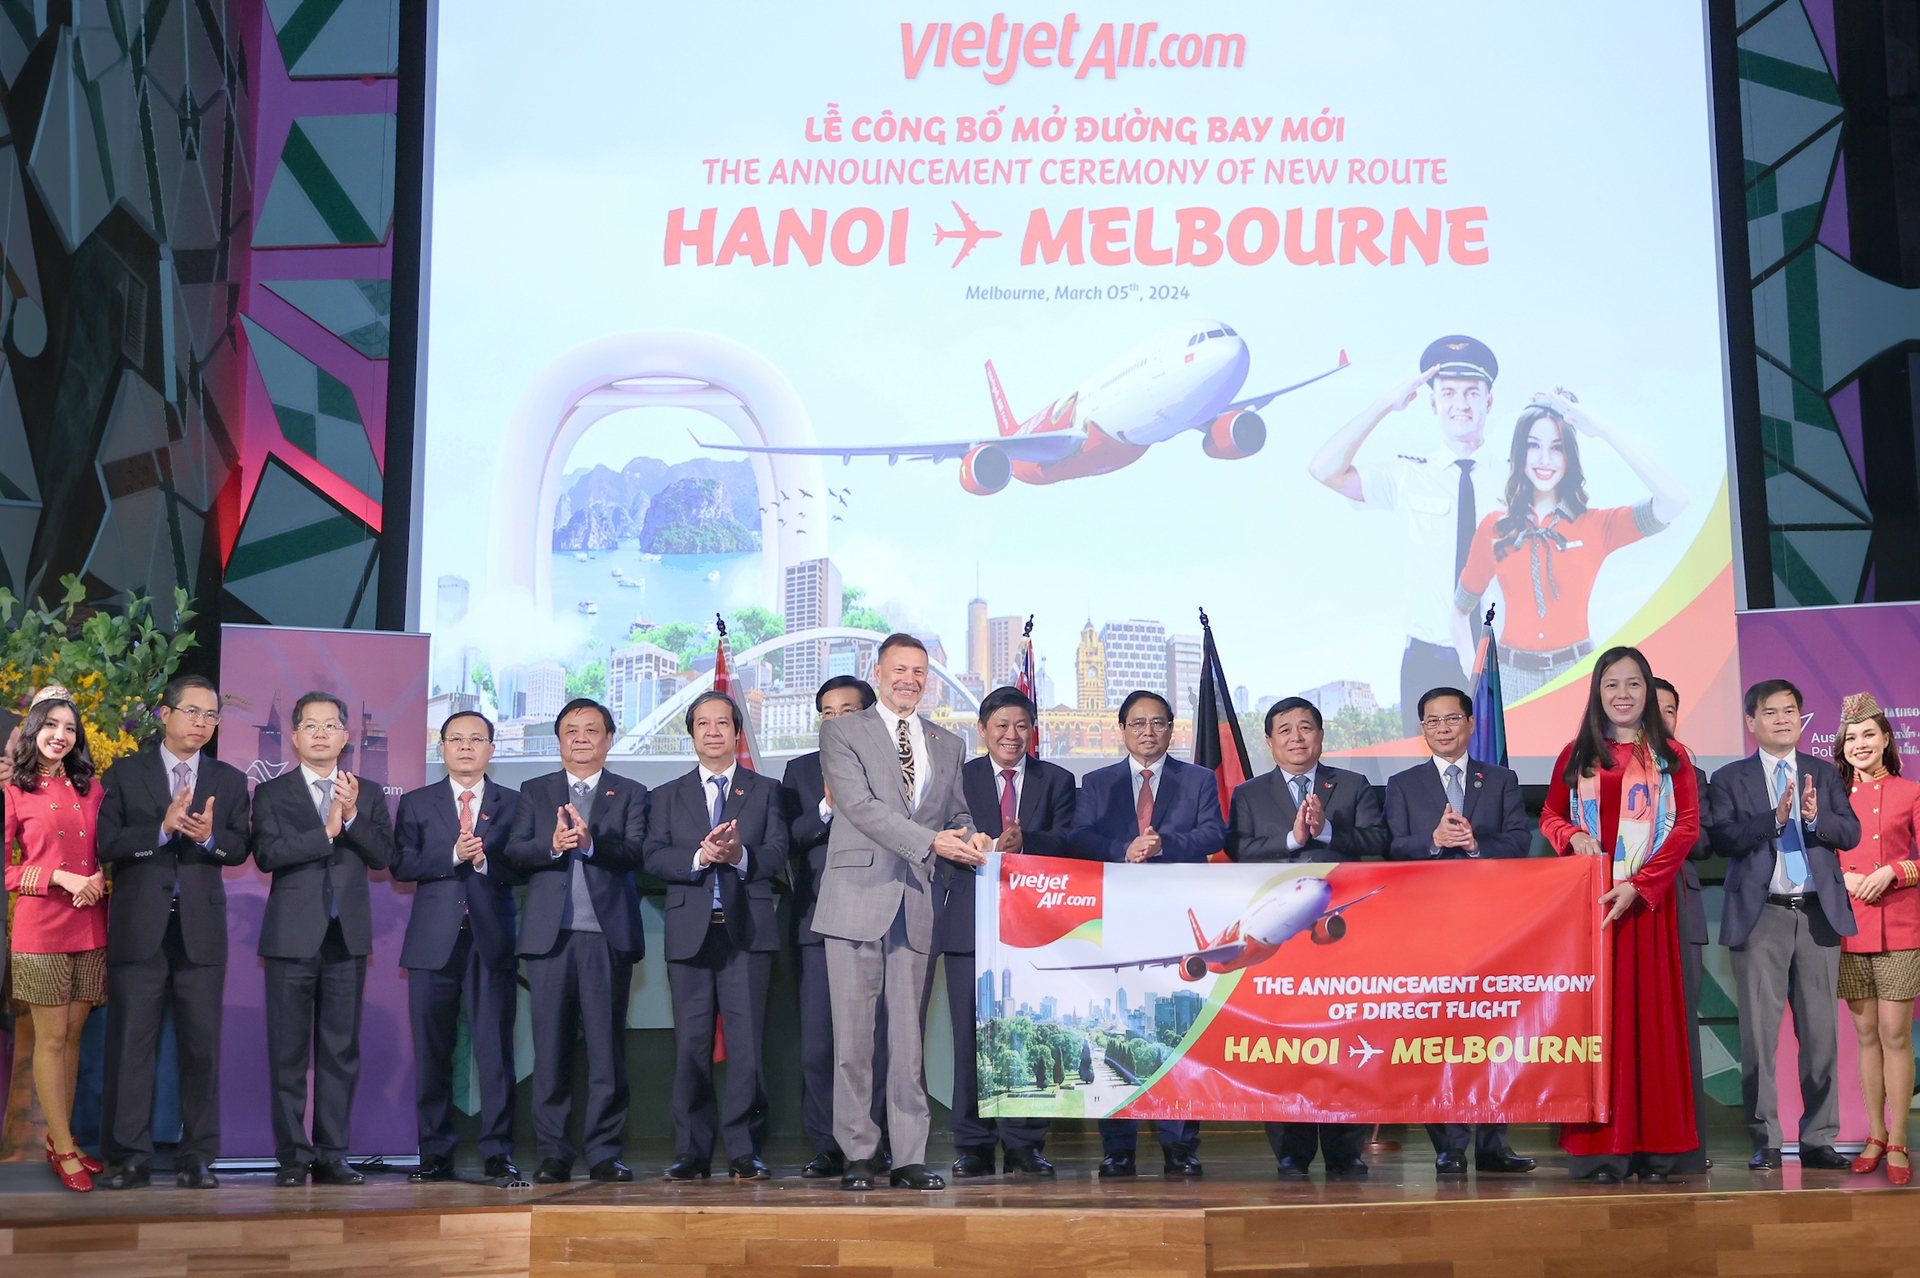 Vietjet announces the launch of direct flights between Hanoi and Melbourne at the Vietnam-Australia forum held in Melbourne, Australia, March 5, 2024. Photo courtesy of Vietjet.